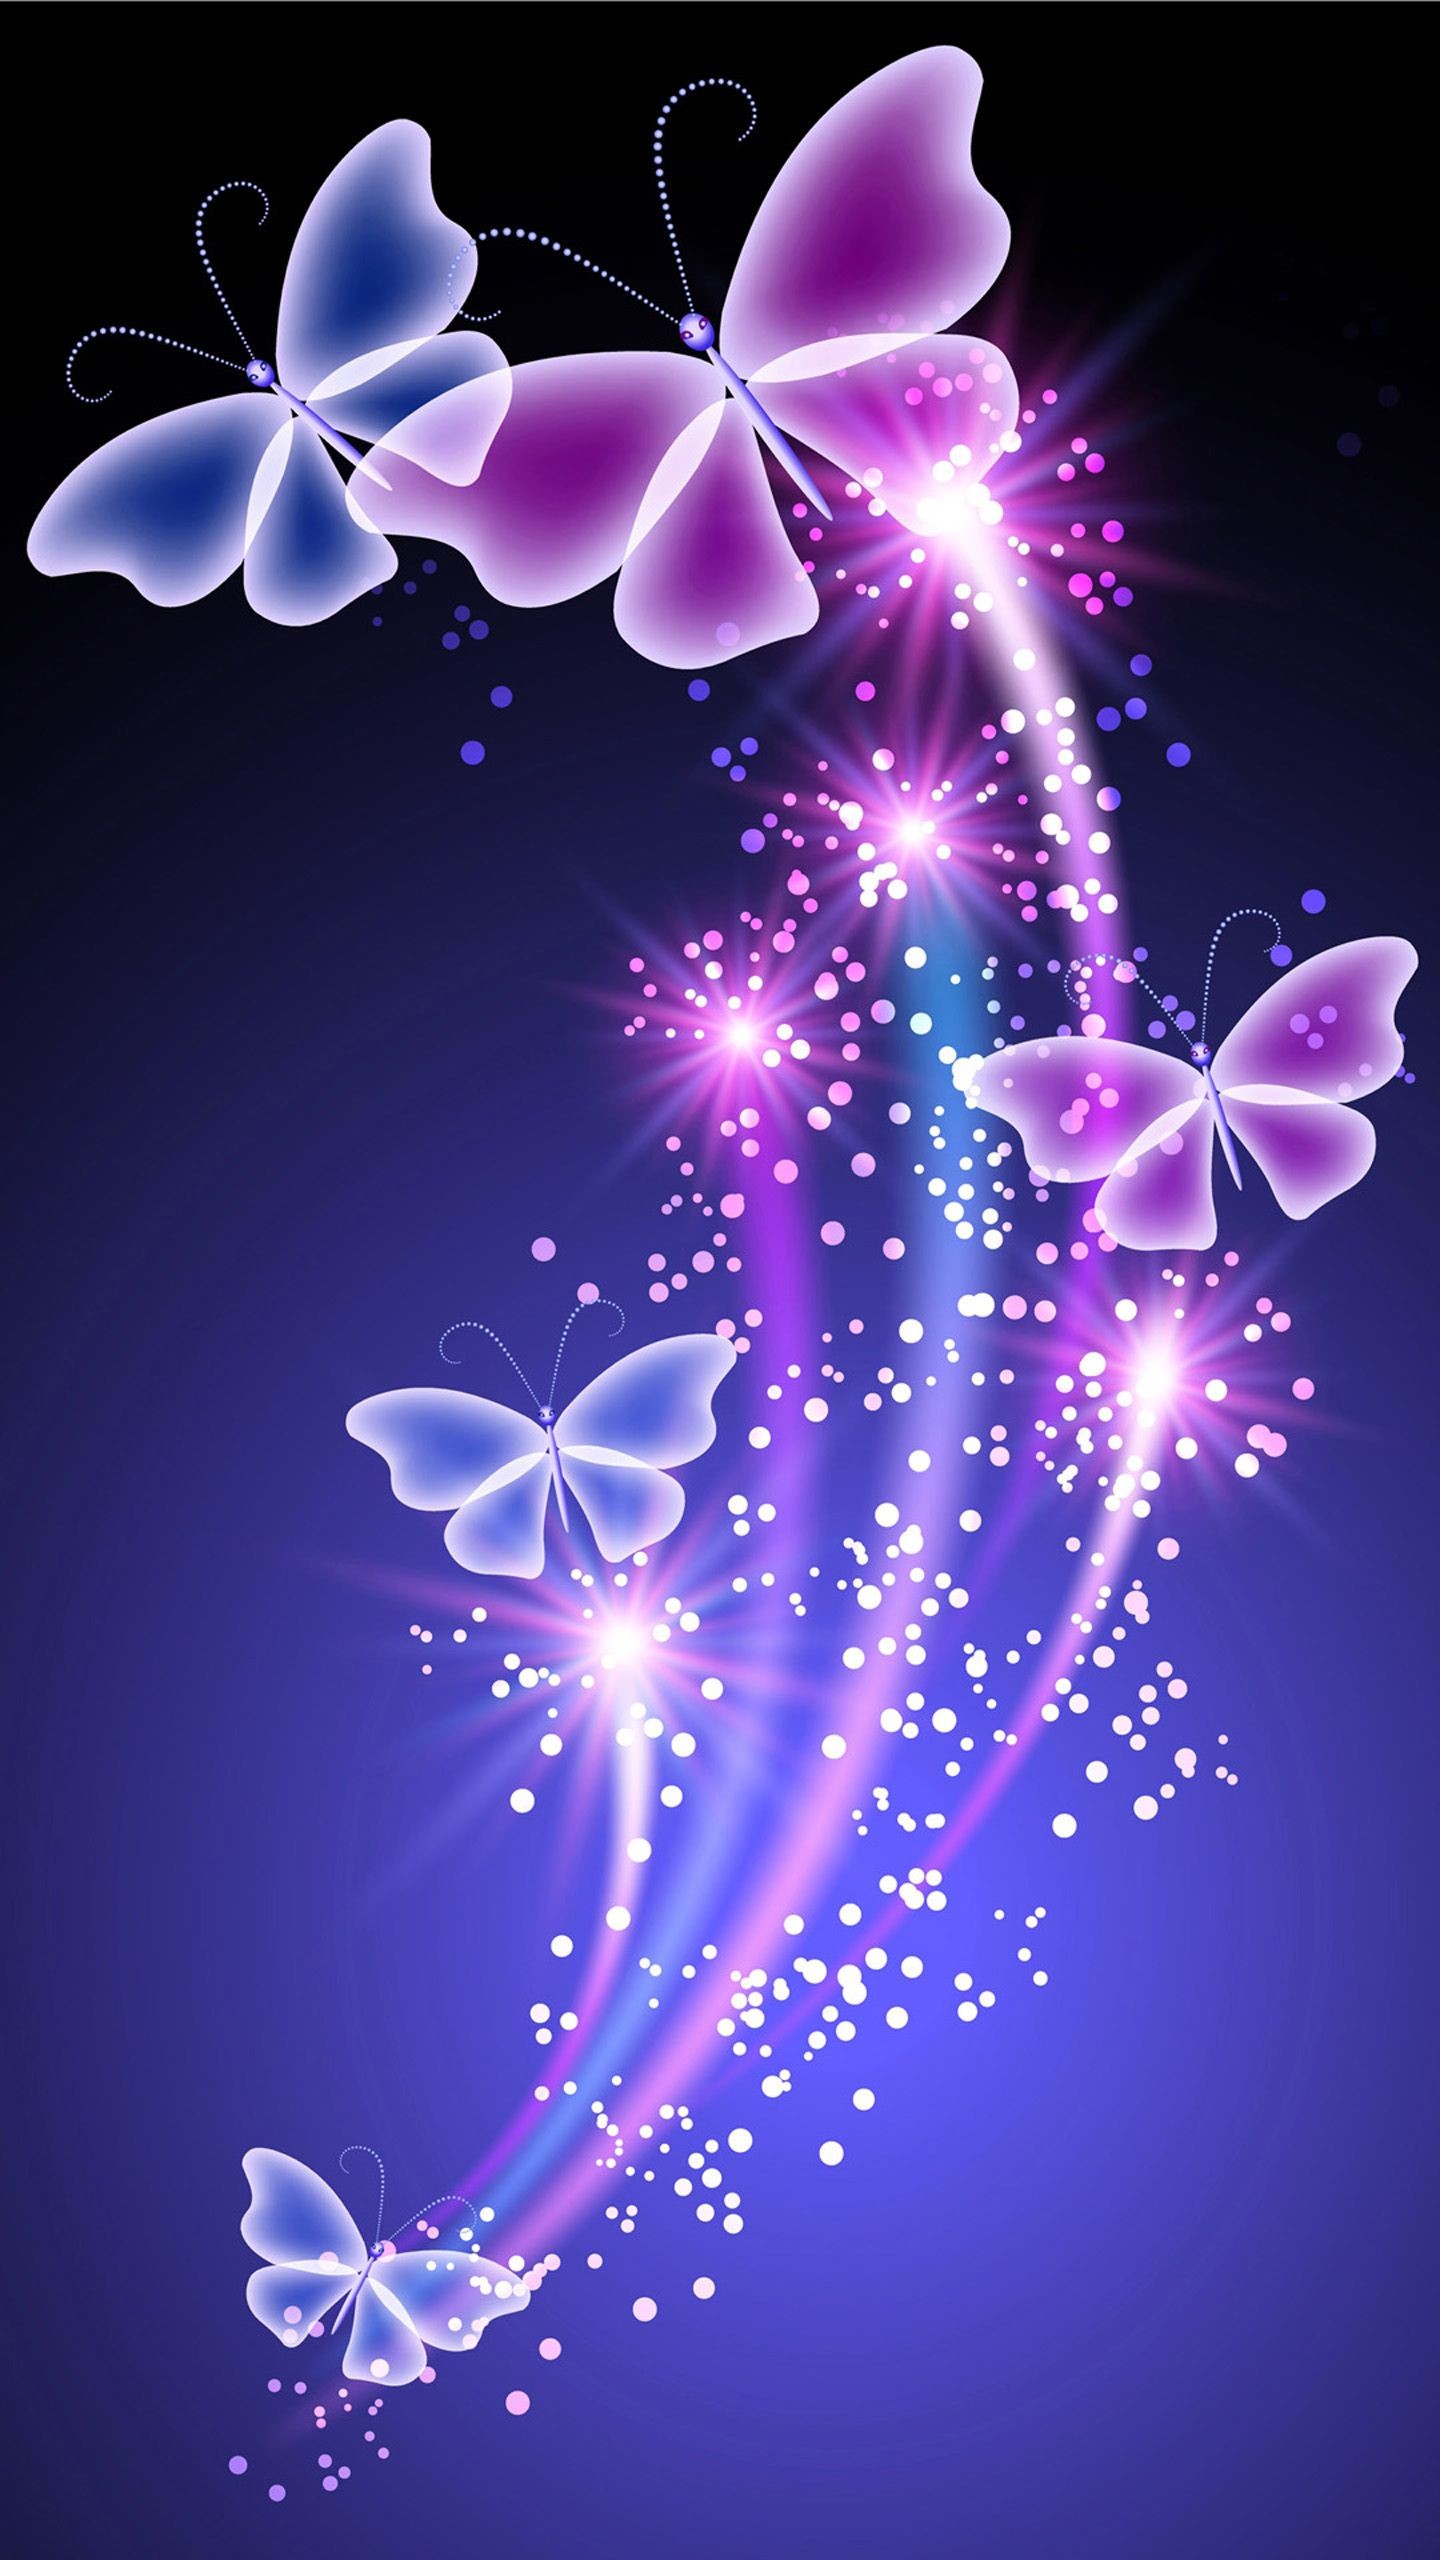 wallpaper hd,violet,purple,butterfly,graphic design,moths and butterflies